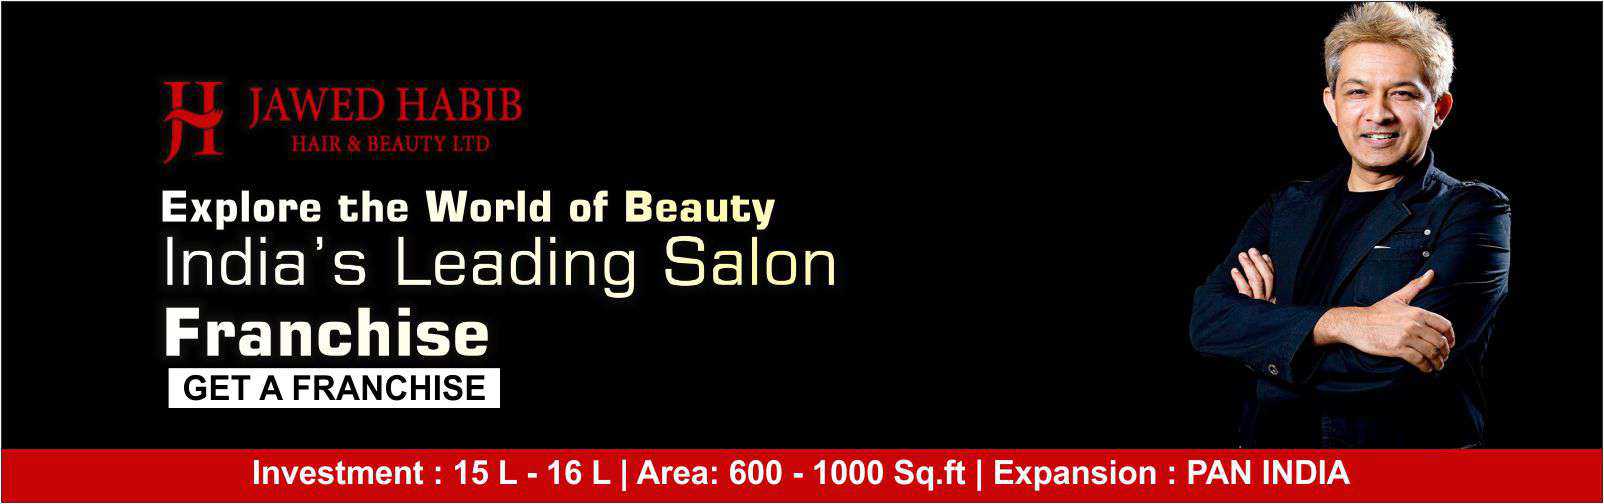 Jawed Habib Hair Beauty Beauty And Salon Franchise